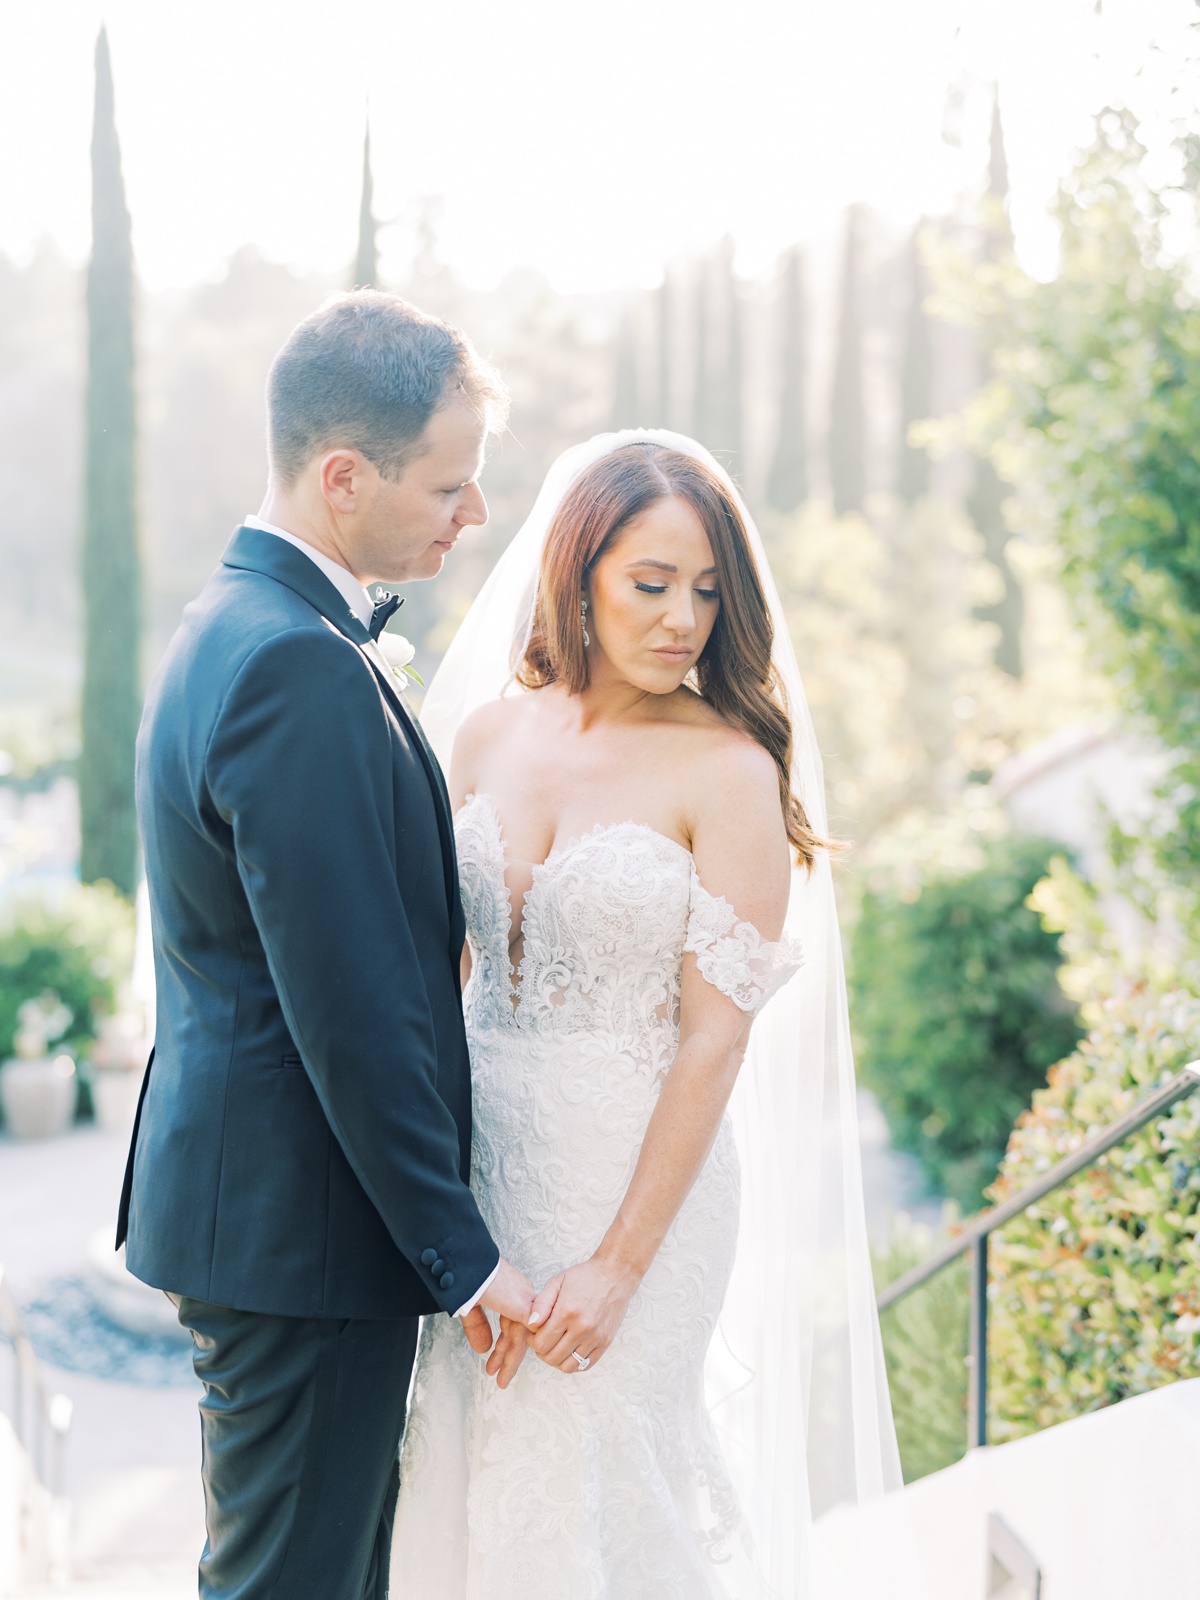 Bride and groom wedding portrait pose ideas | Rancho Bernardo Inn wedding